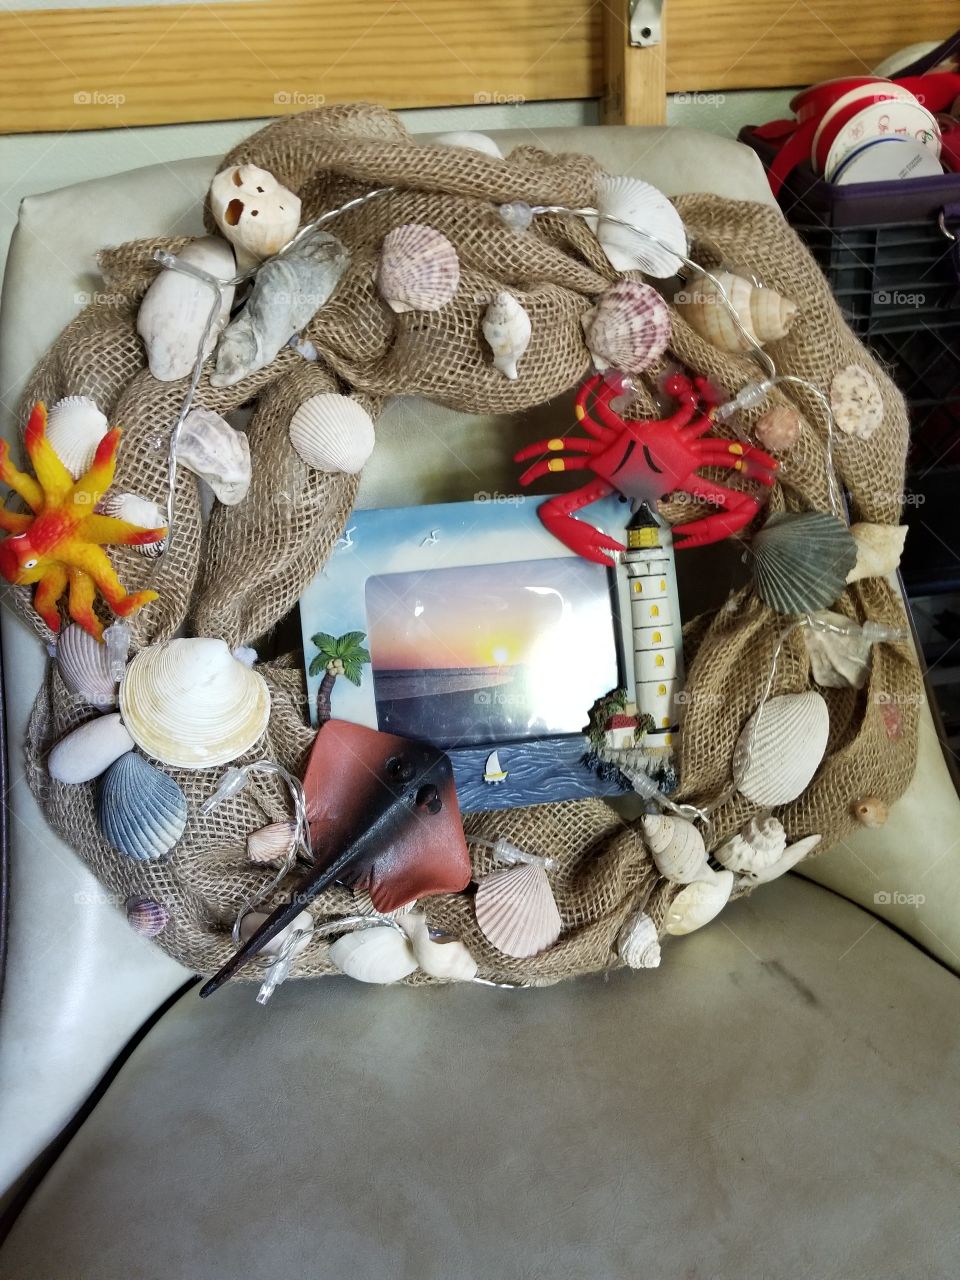 shell wreath